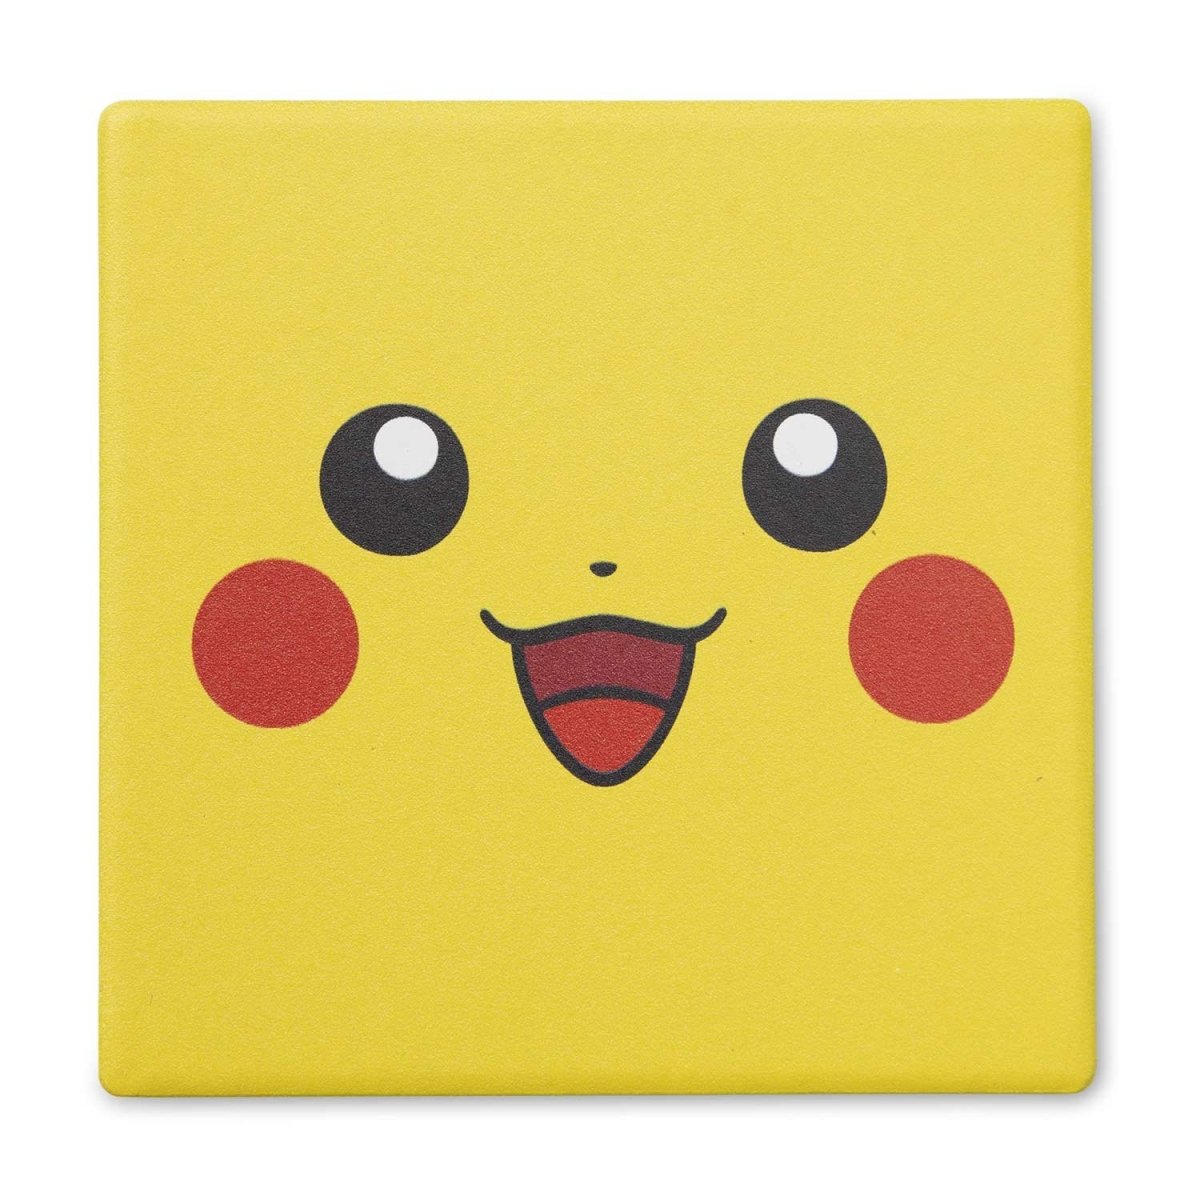 Pikachu Pokémon Home Accents Coasters (4-Pack)